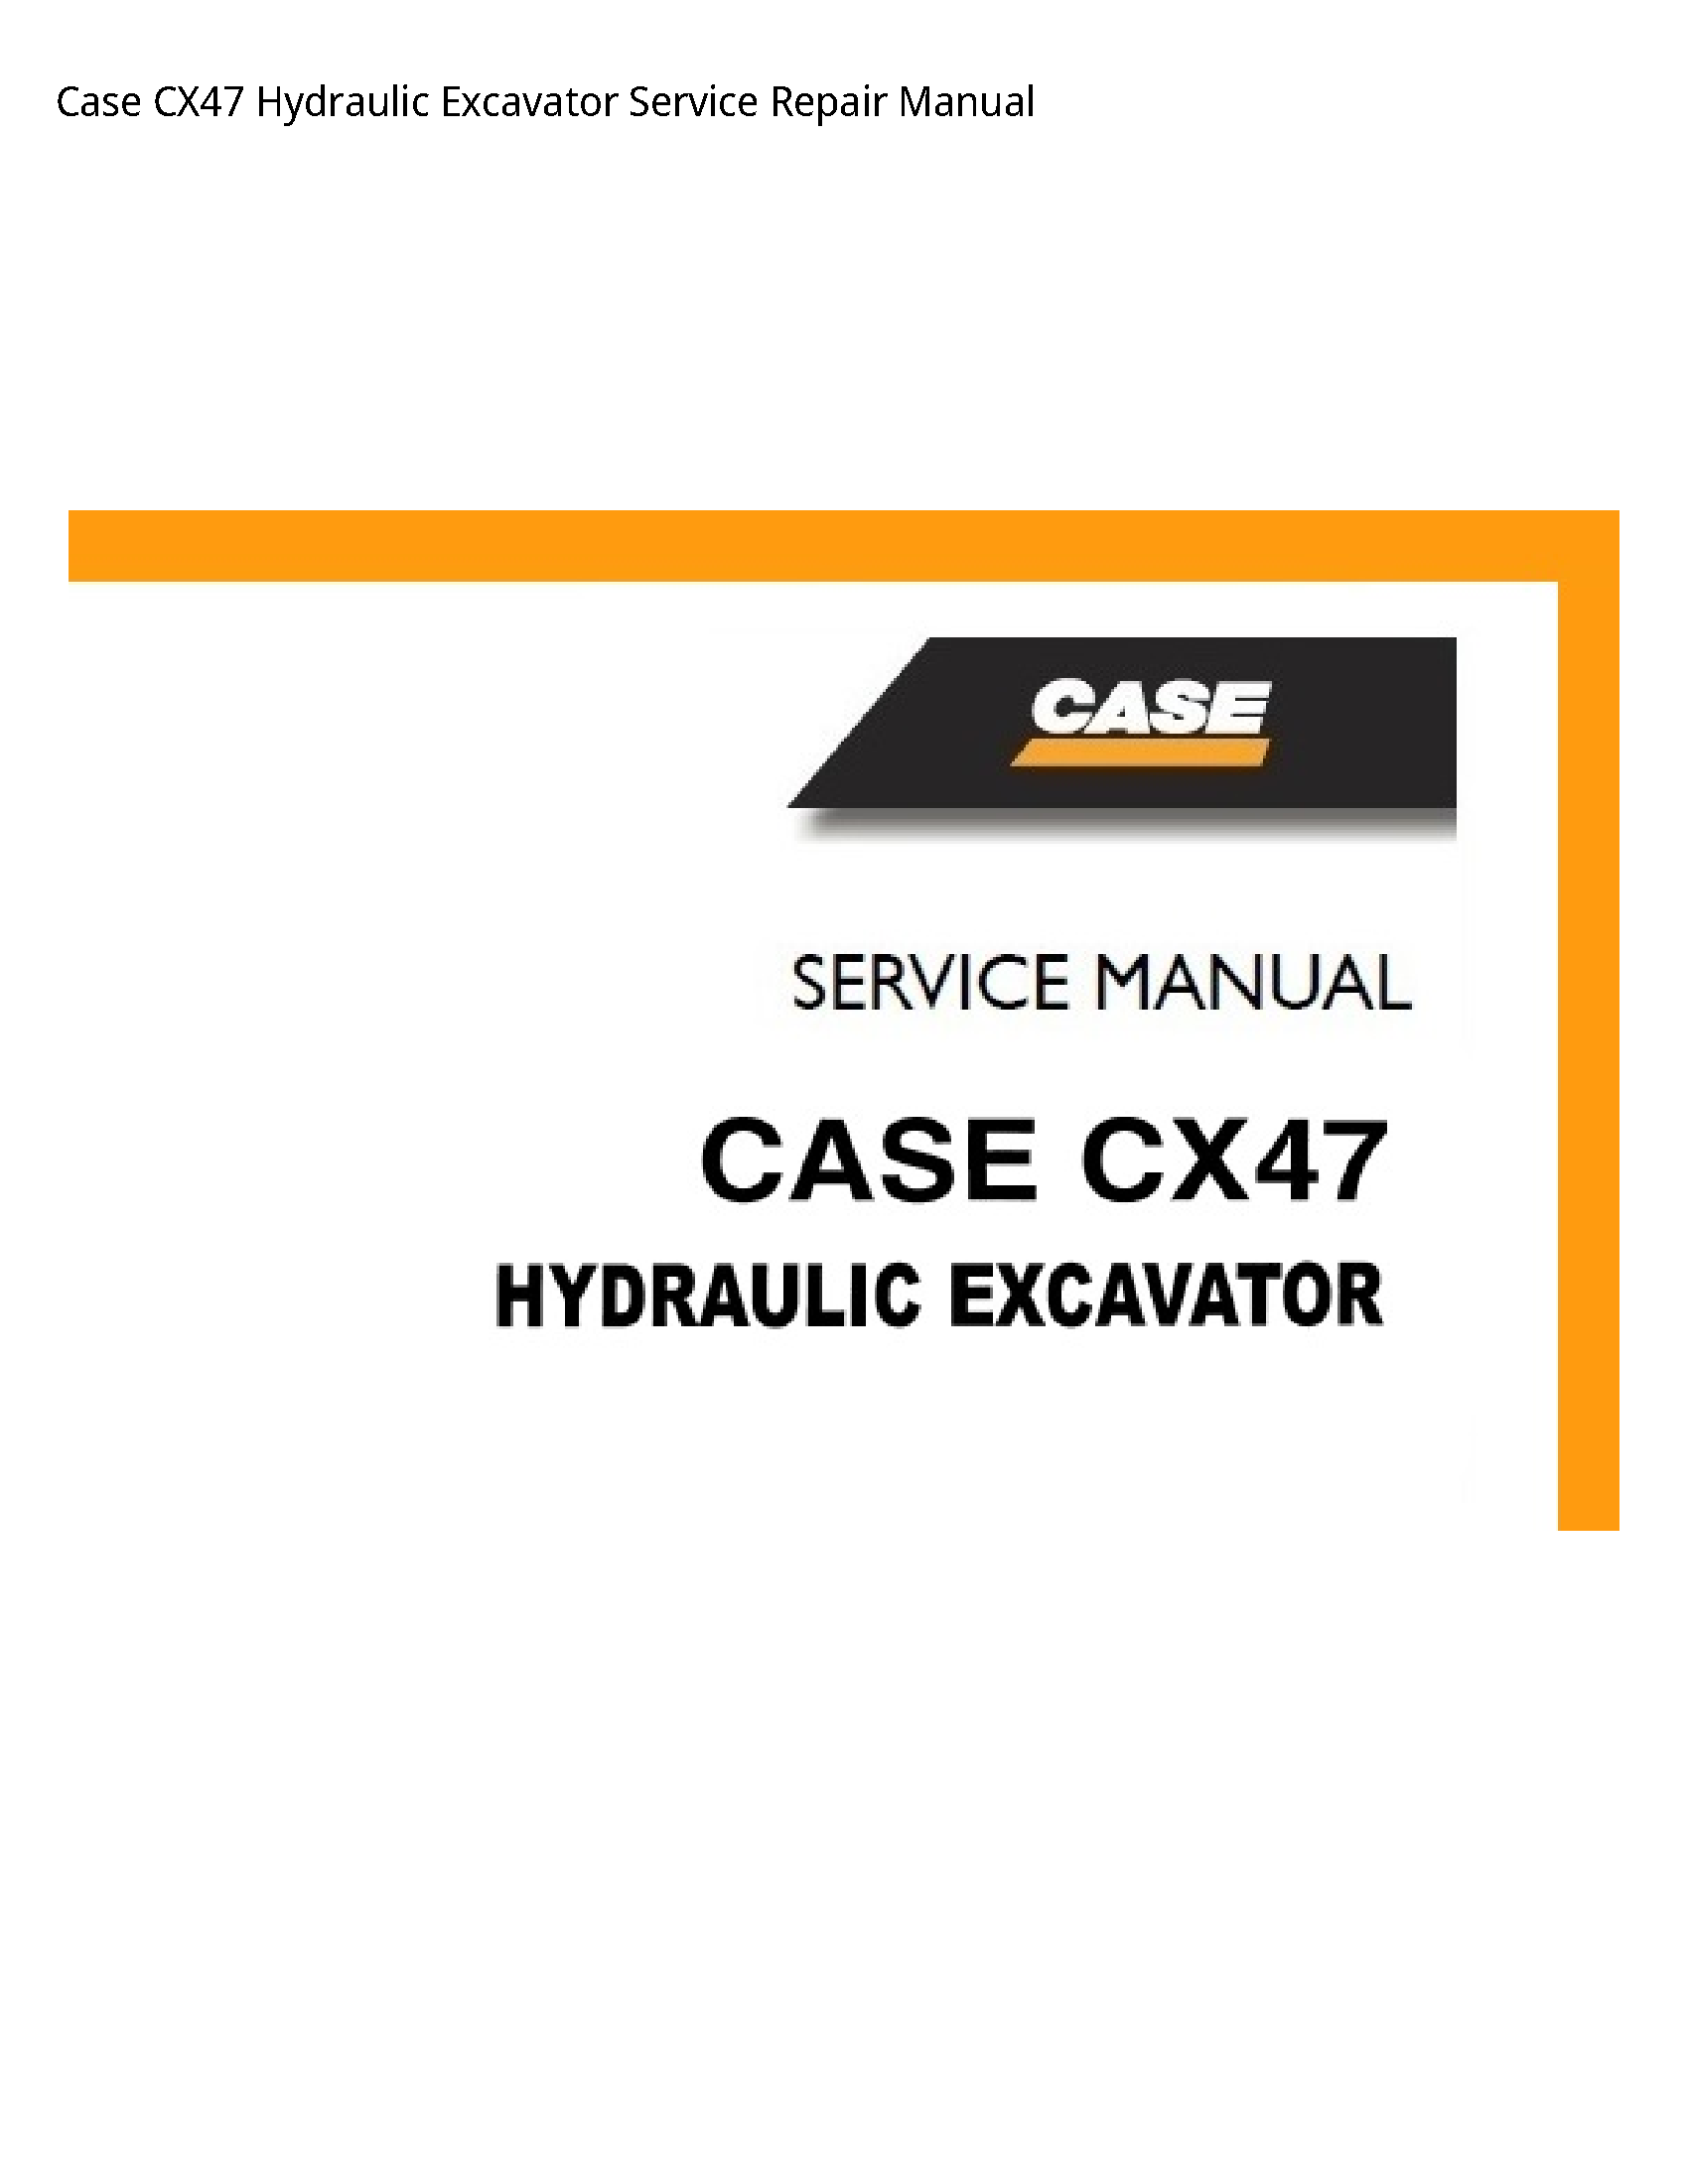 Case/Case IH CX47 Hydraulic Excavator manual